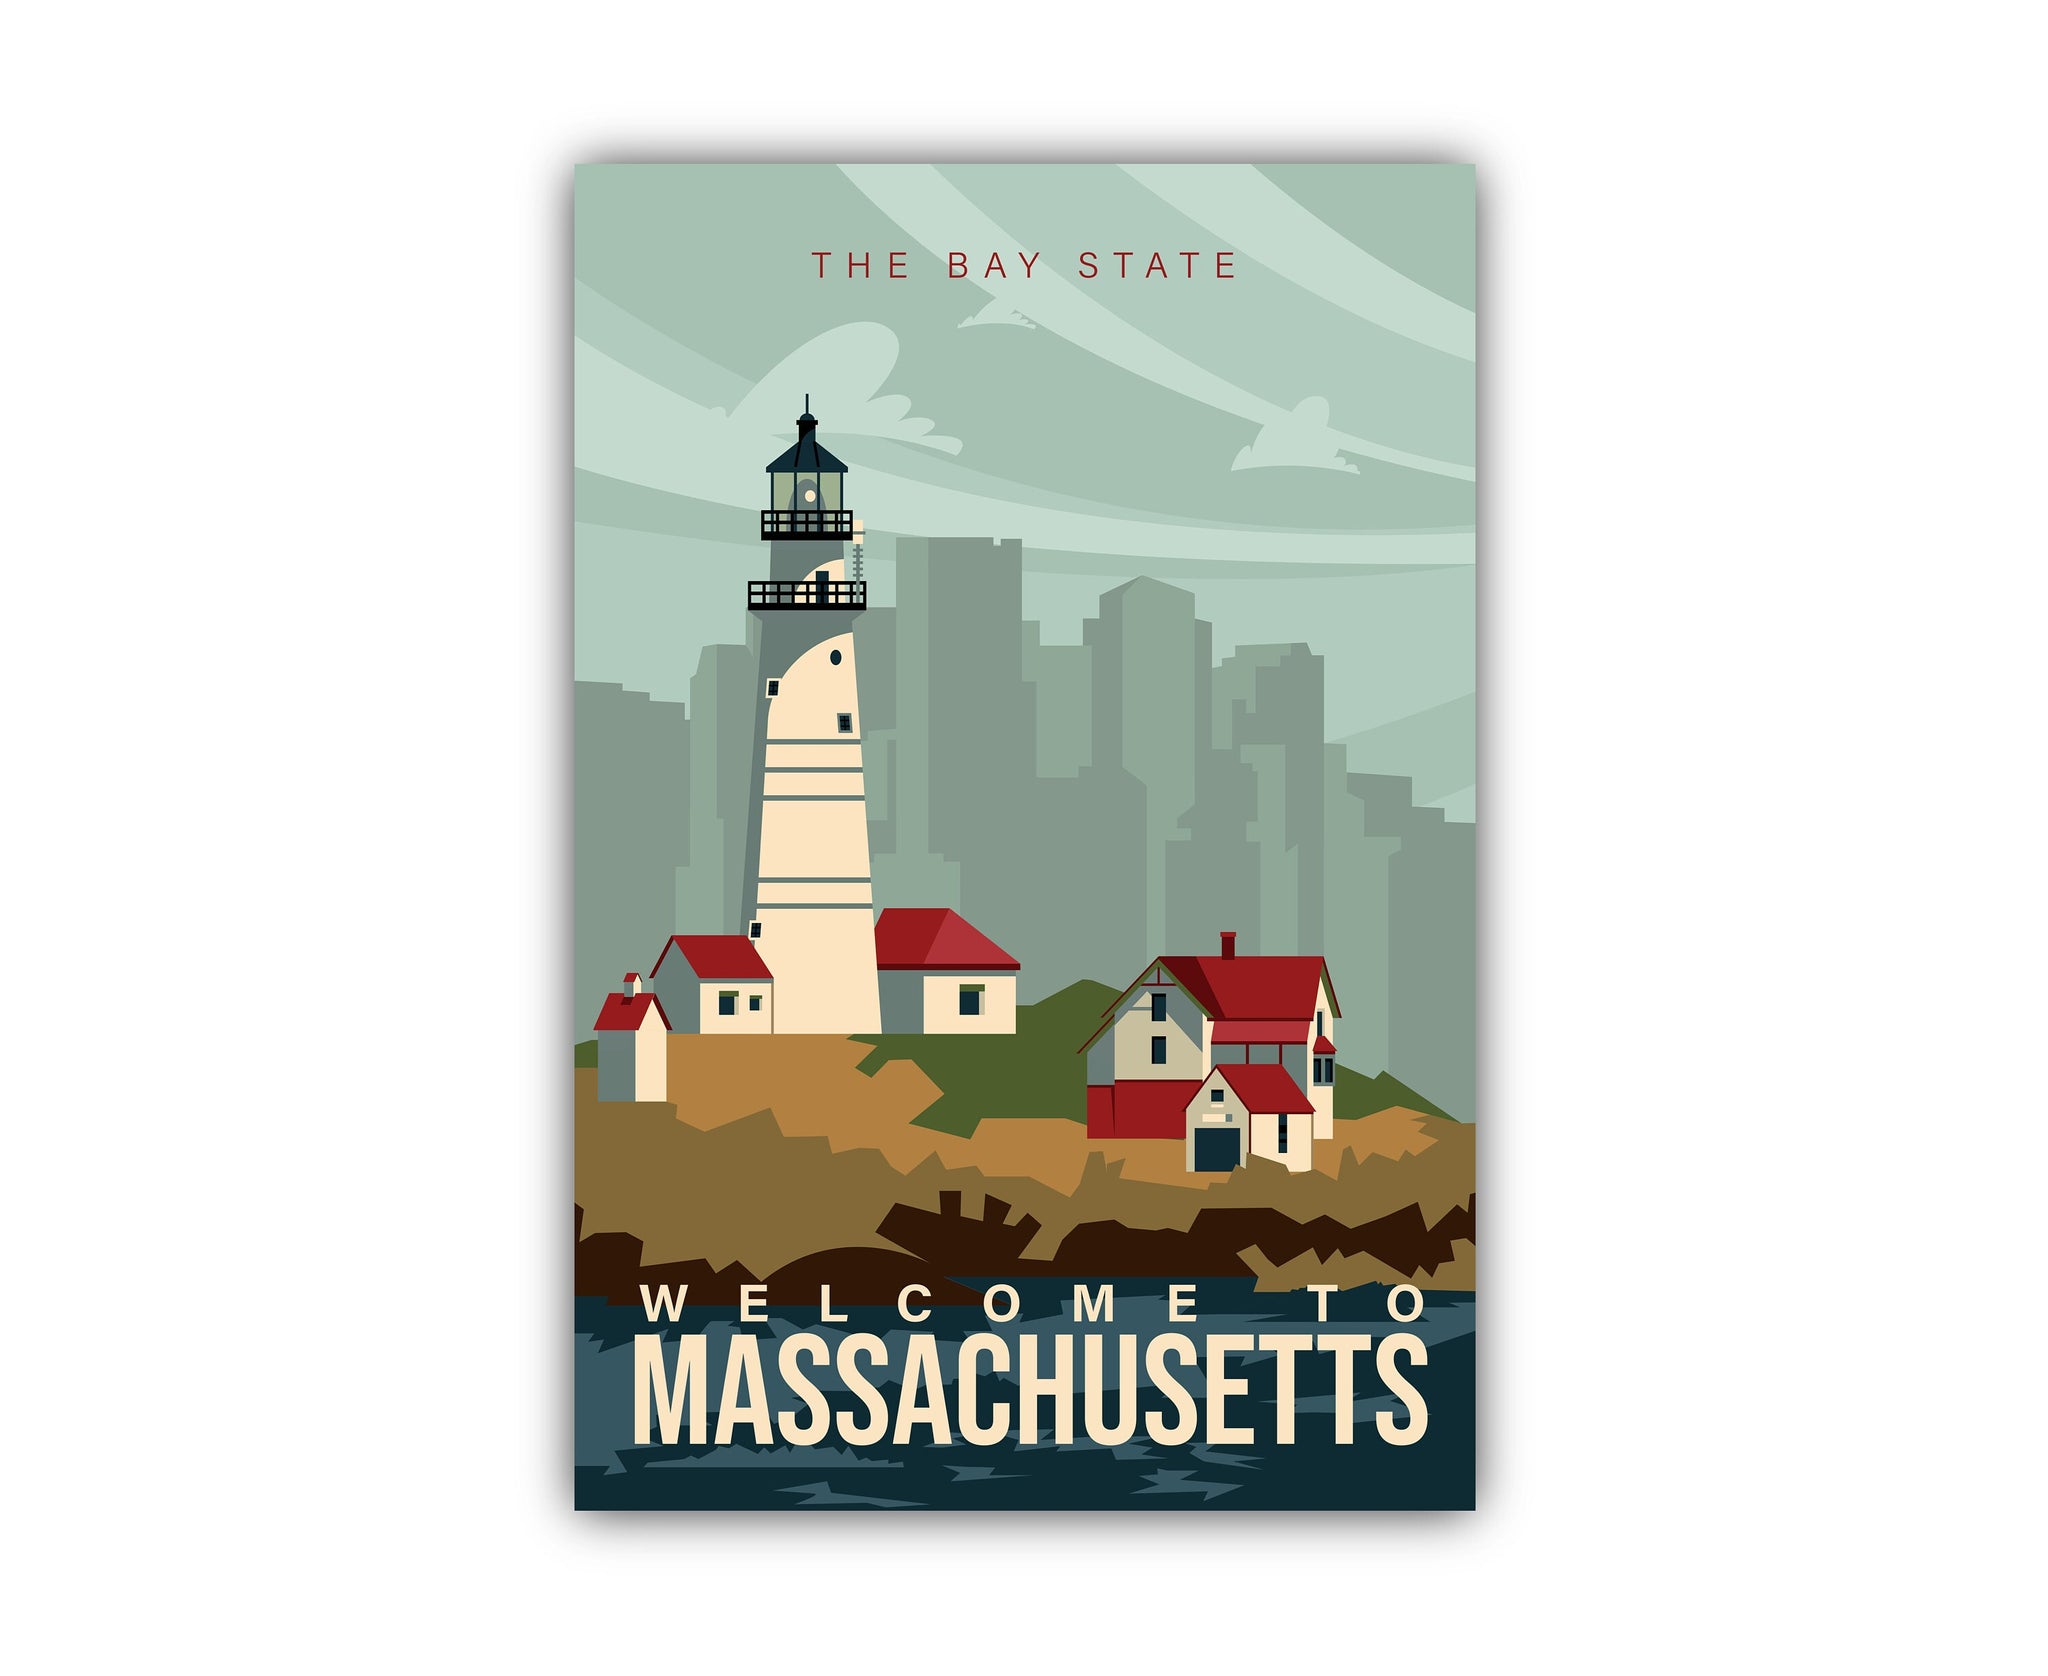 Massachusetts Vintage Rustic Poster Print, Retro Style Travel Poster